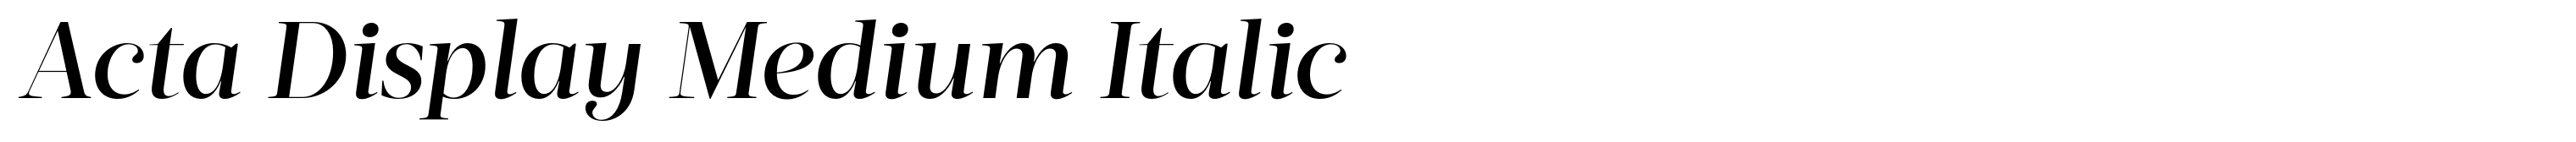 Acta Display Medium Italic